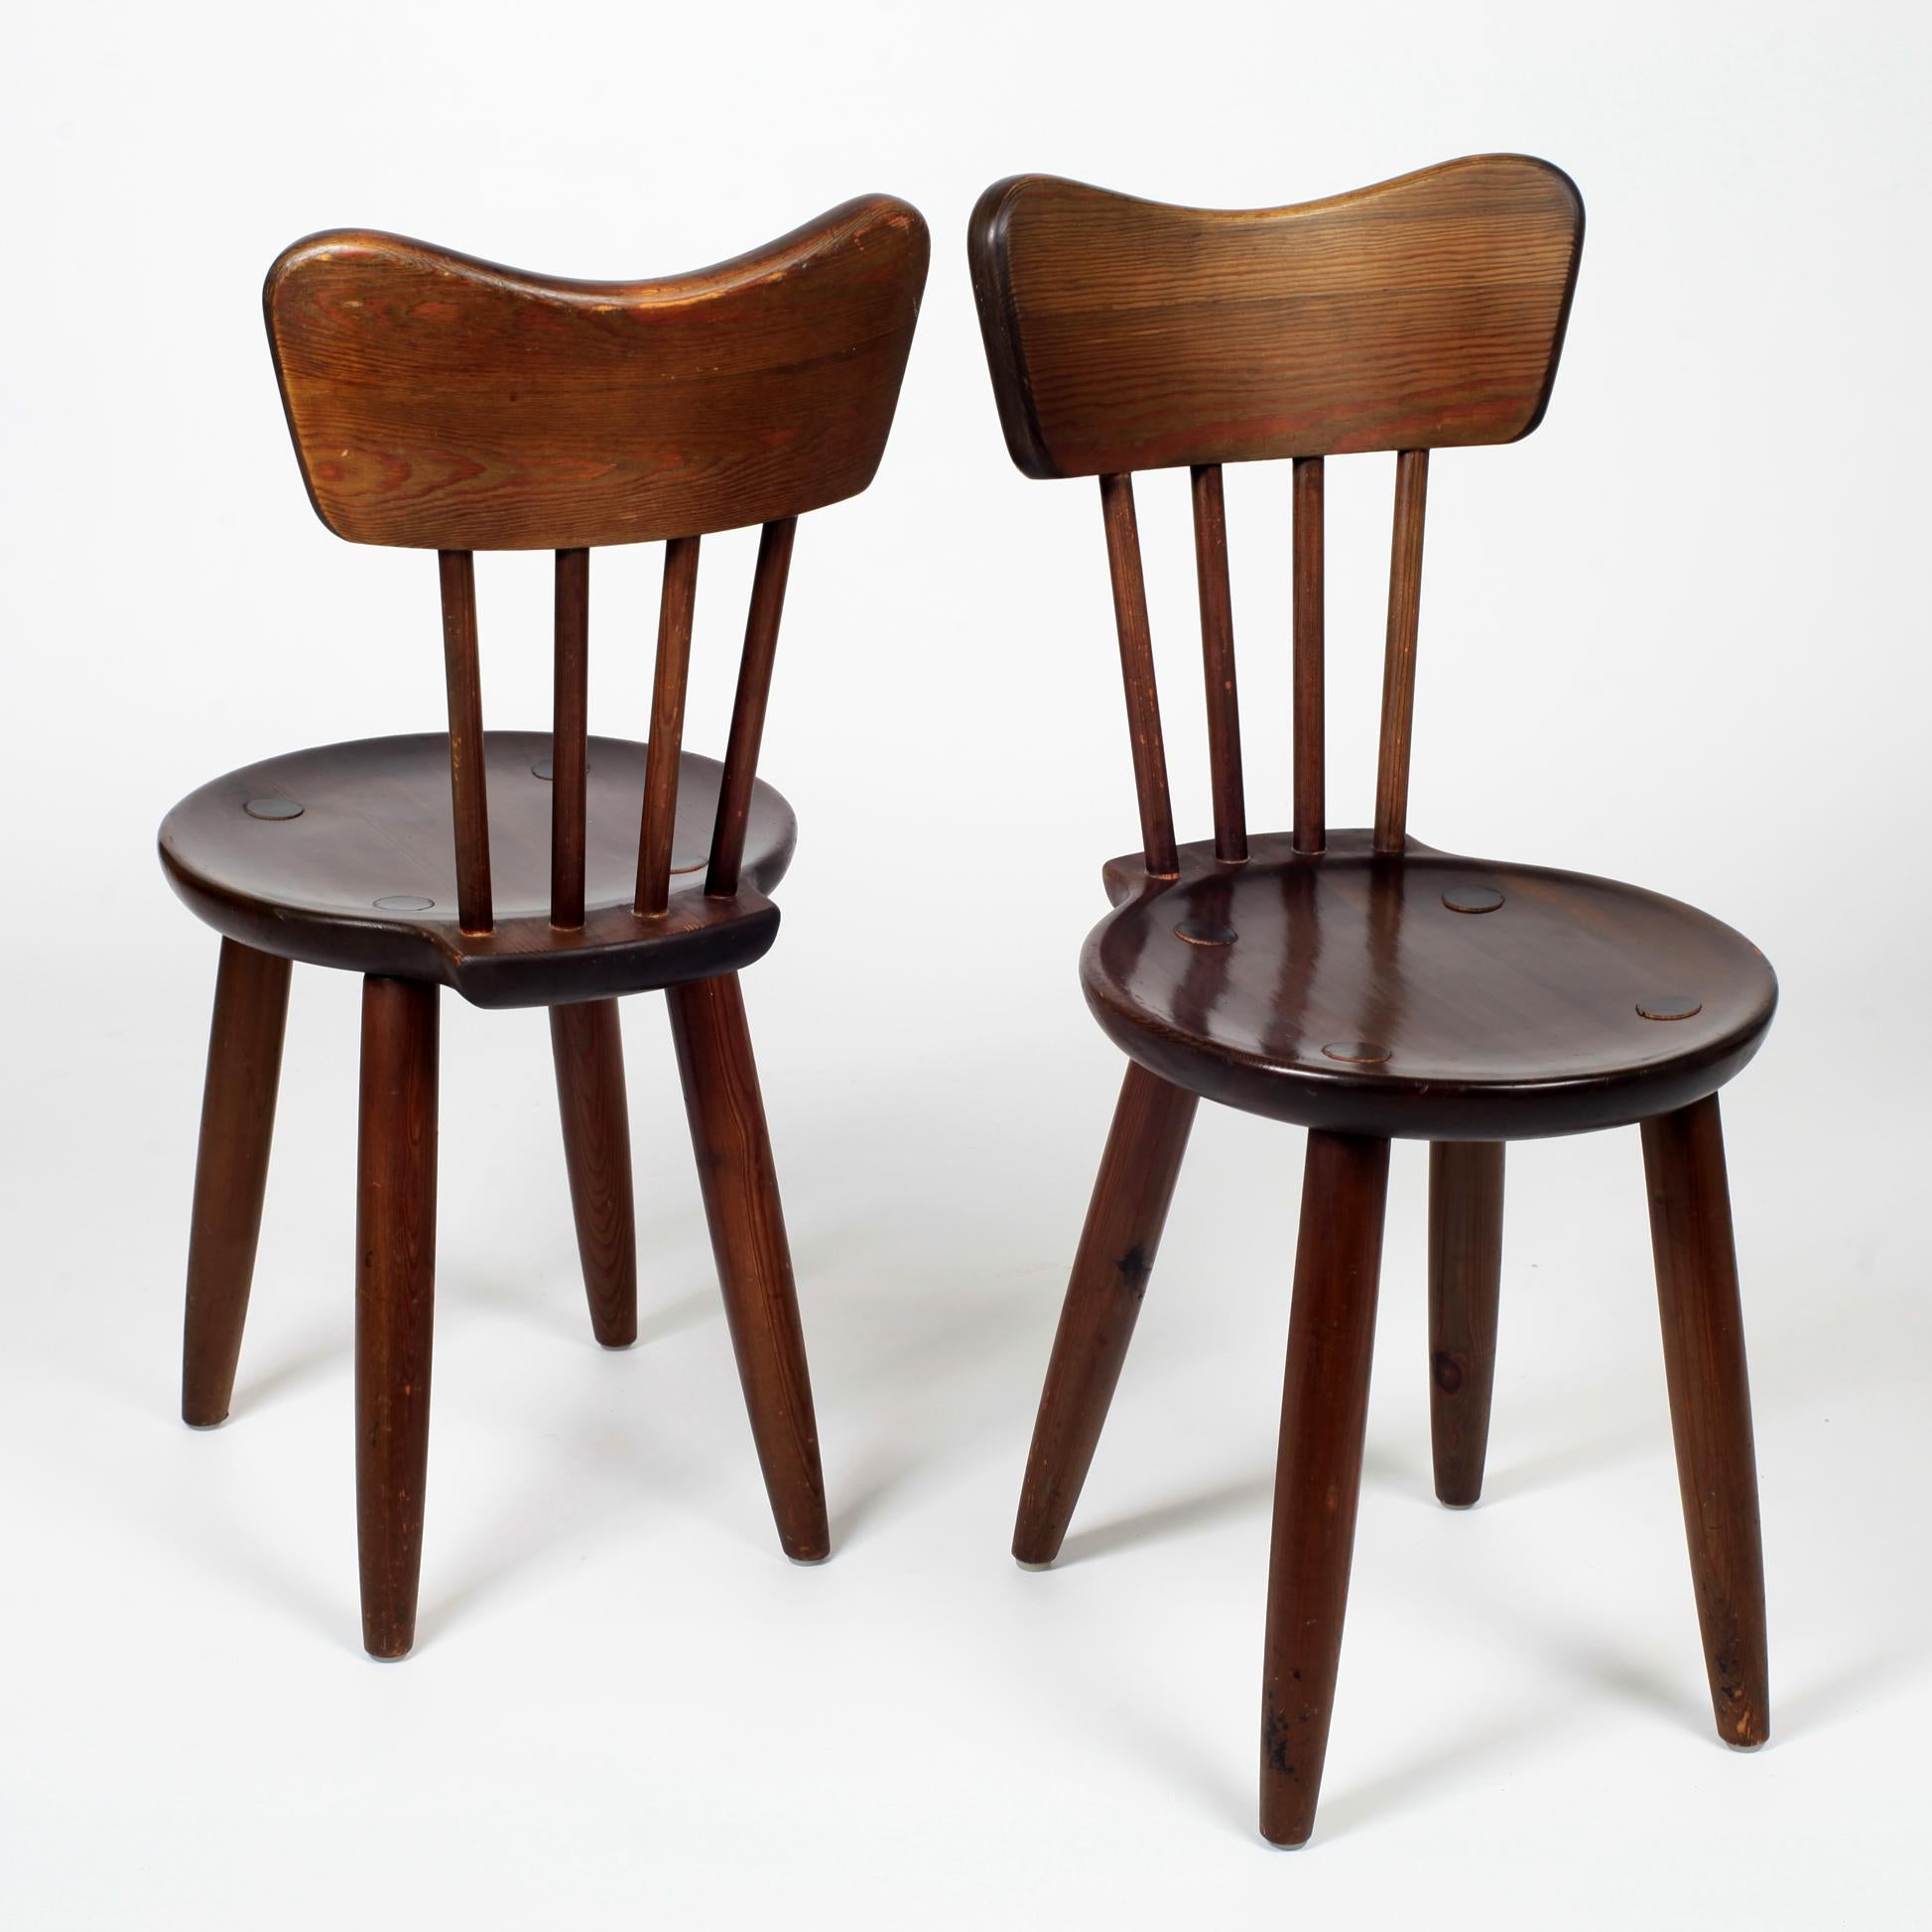 Set of 6 Brutalist stained pine wood dining chairs by Torsten Claeson for Steneby Hemslöjdsförening, 1930, Sweden.
Nice patina.